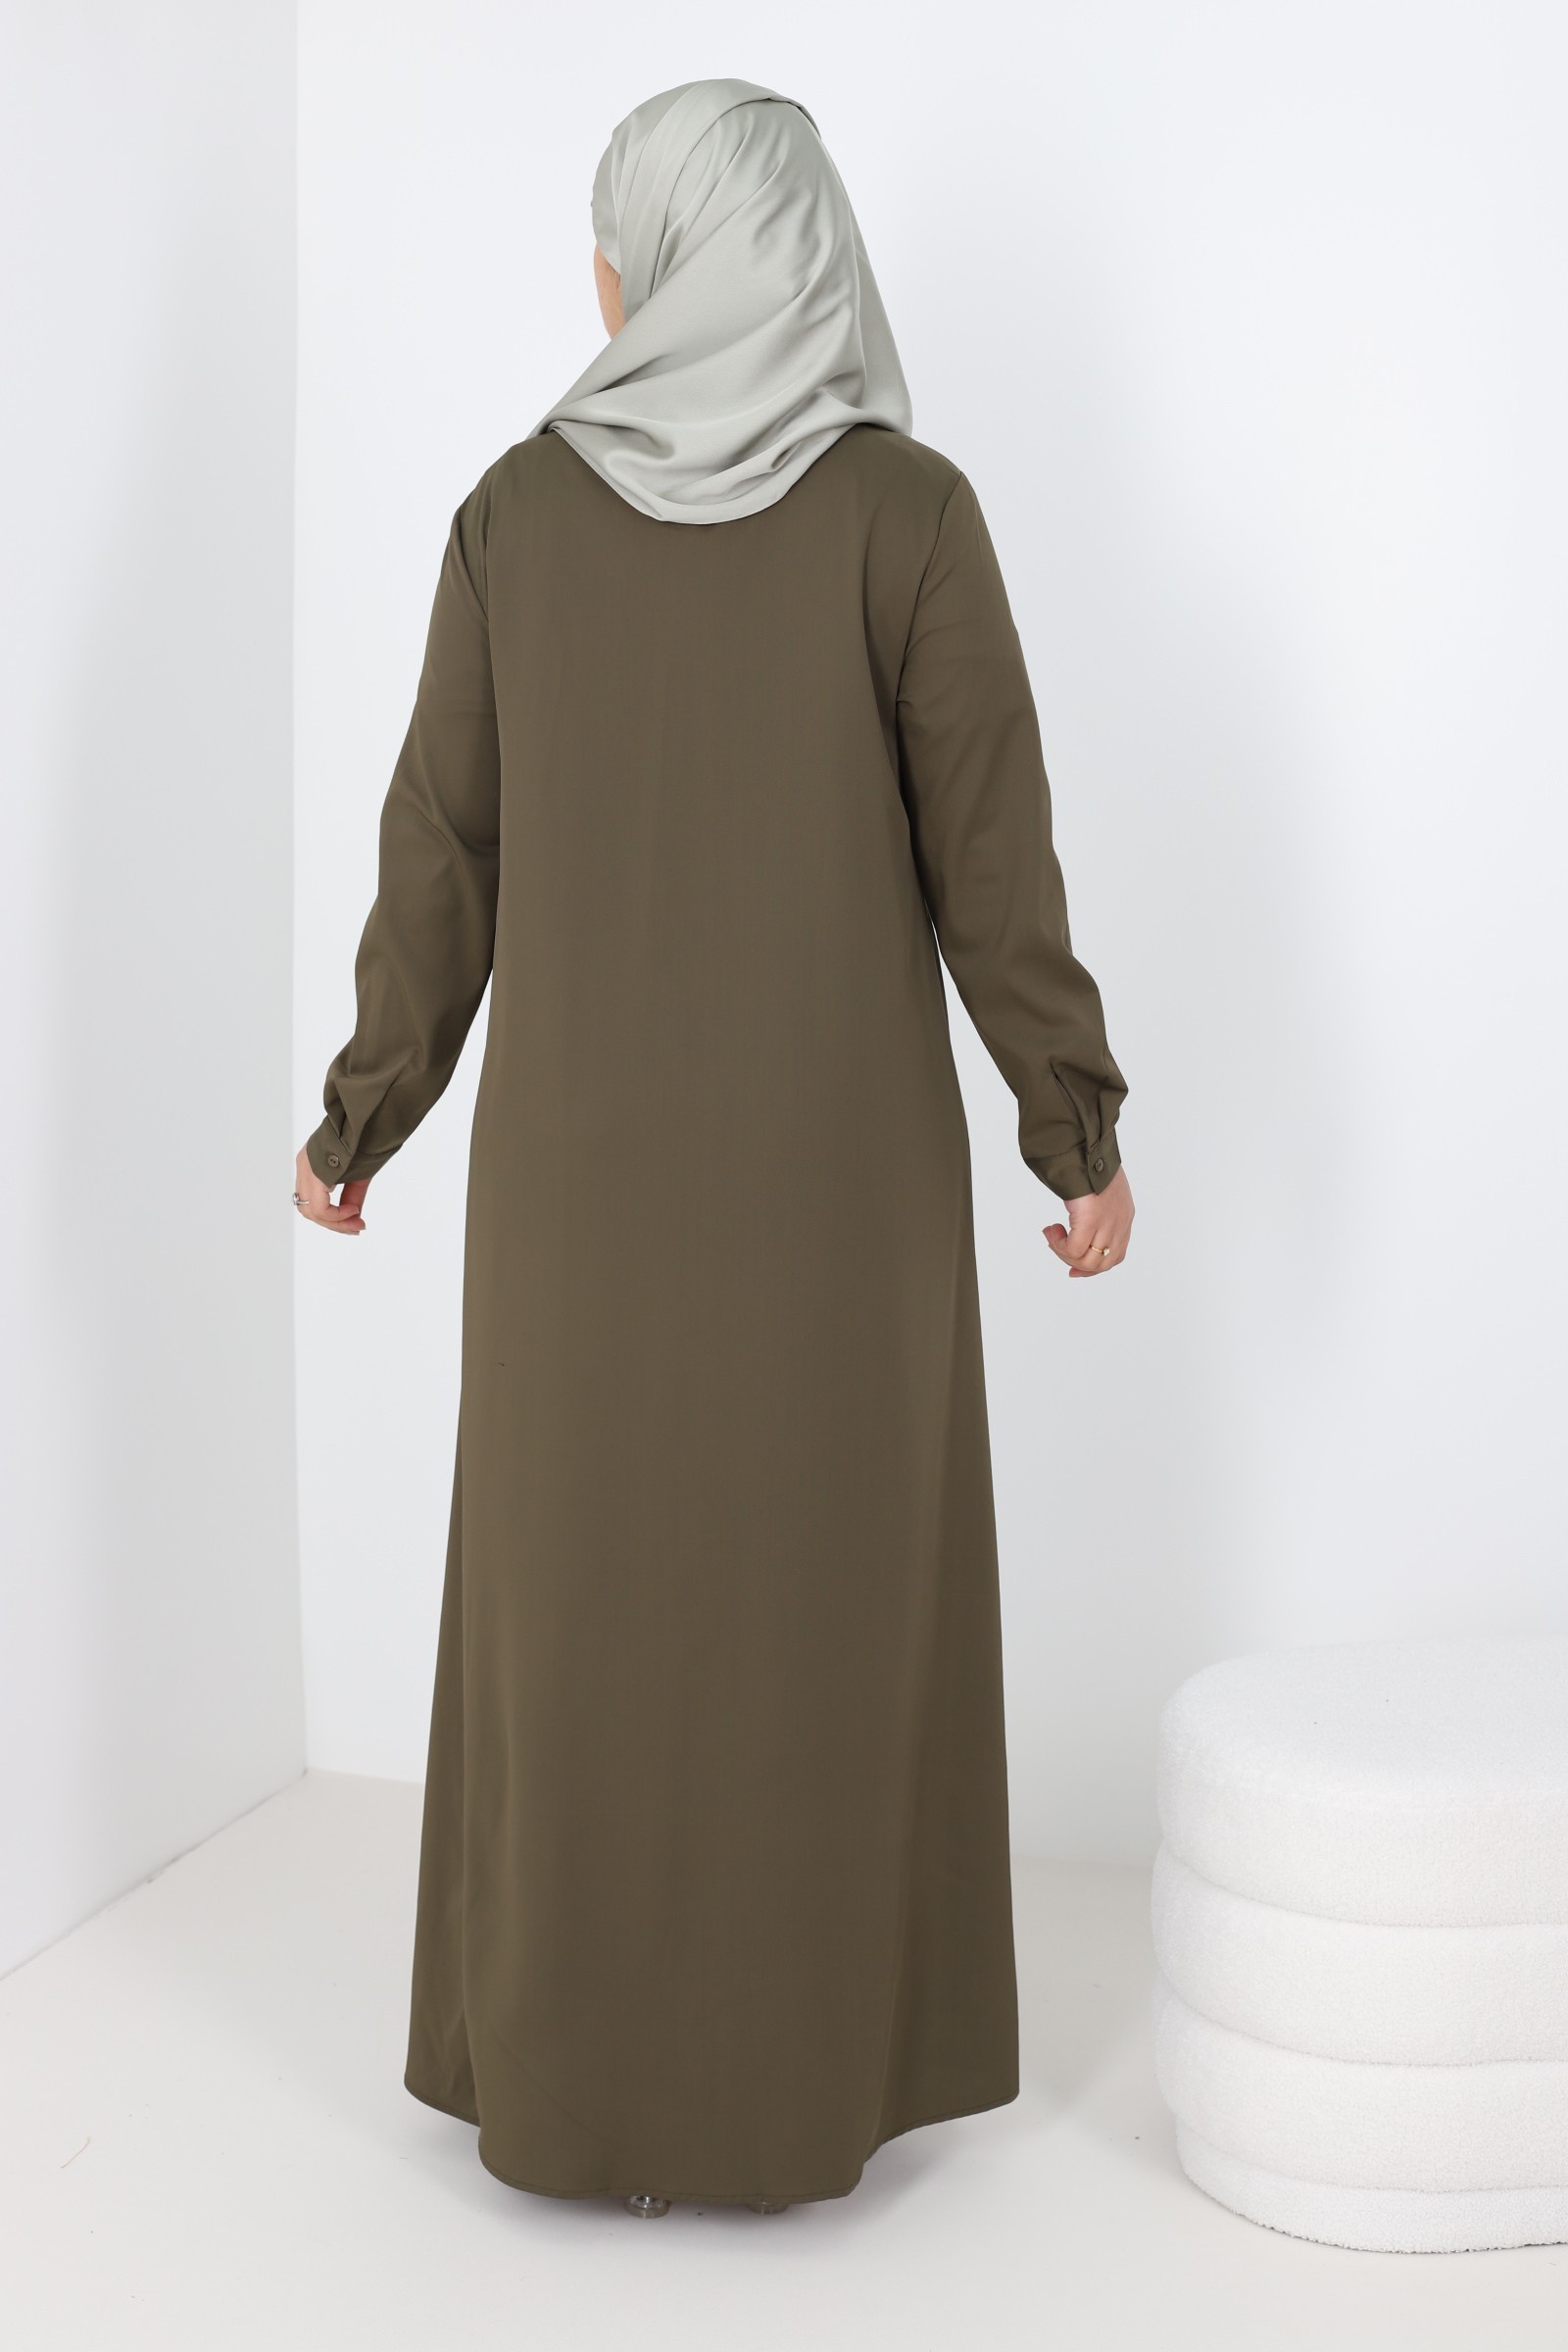 Party long sleeve dress for muslim women